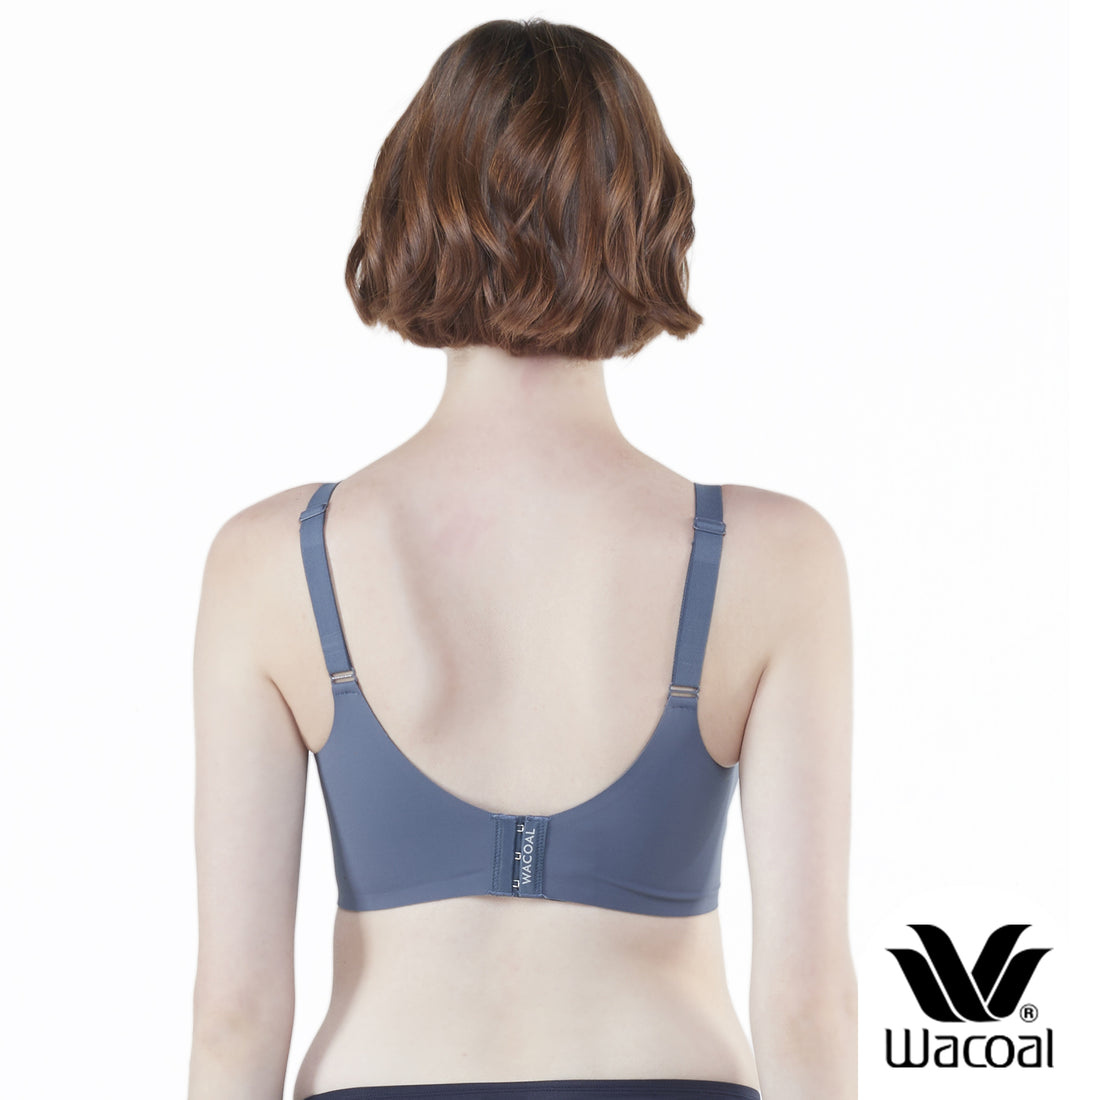 Wacoal Smart Size Go Girls Jelly Bra, Wacoal wireless bra, pack of 2 pieces, model WB3Y28/WB3228, blue (BU)